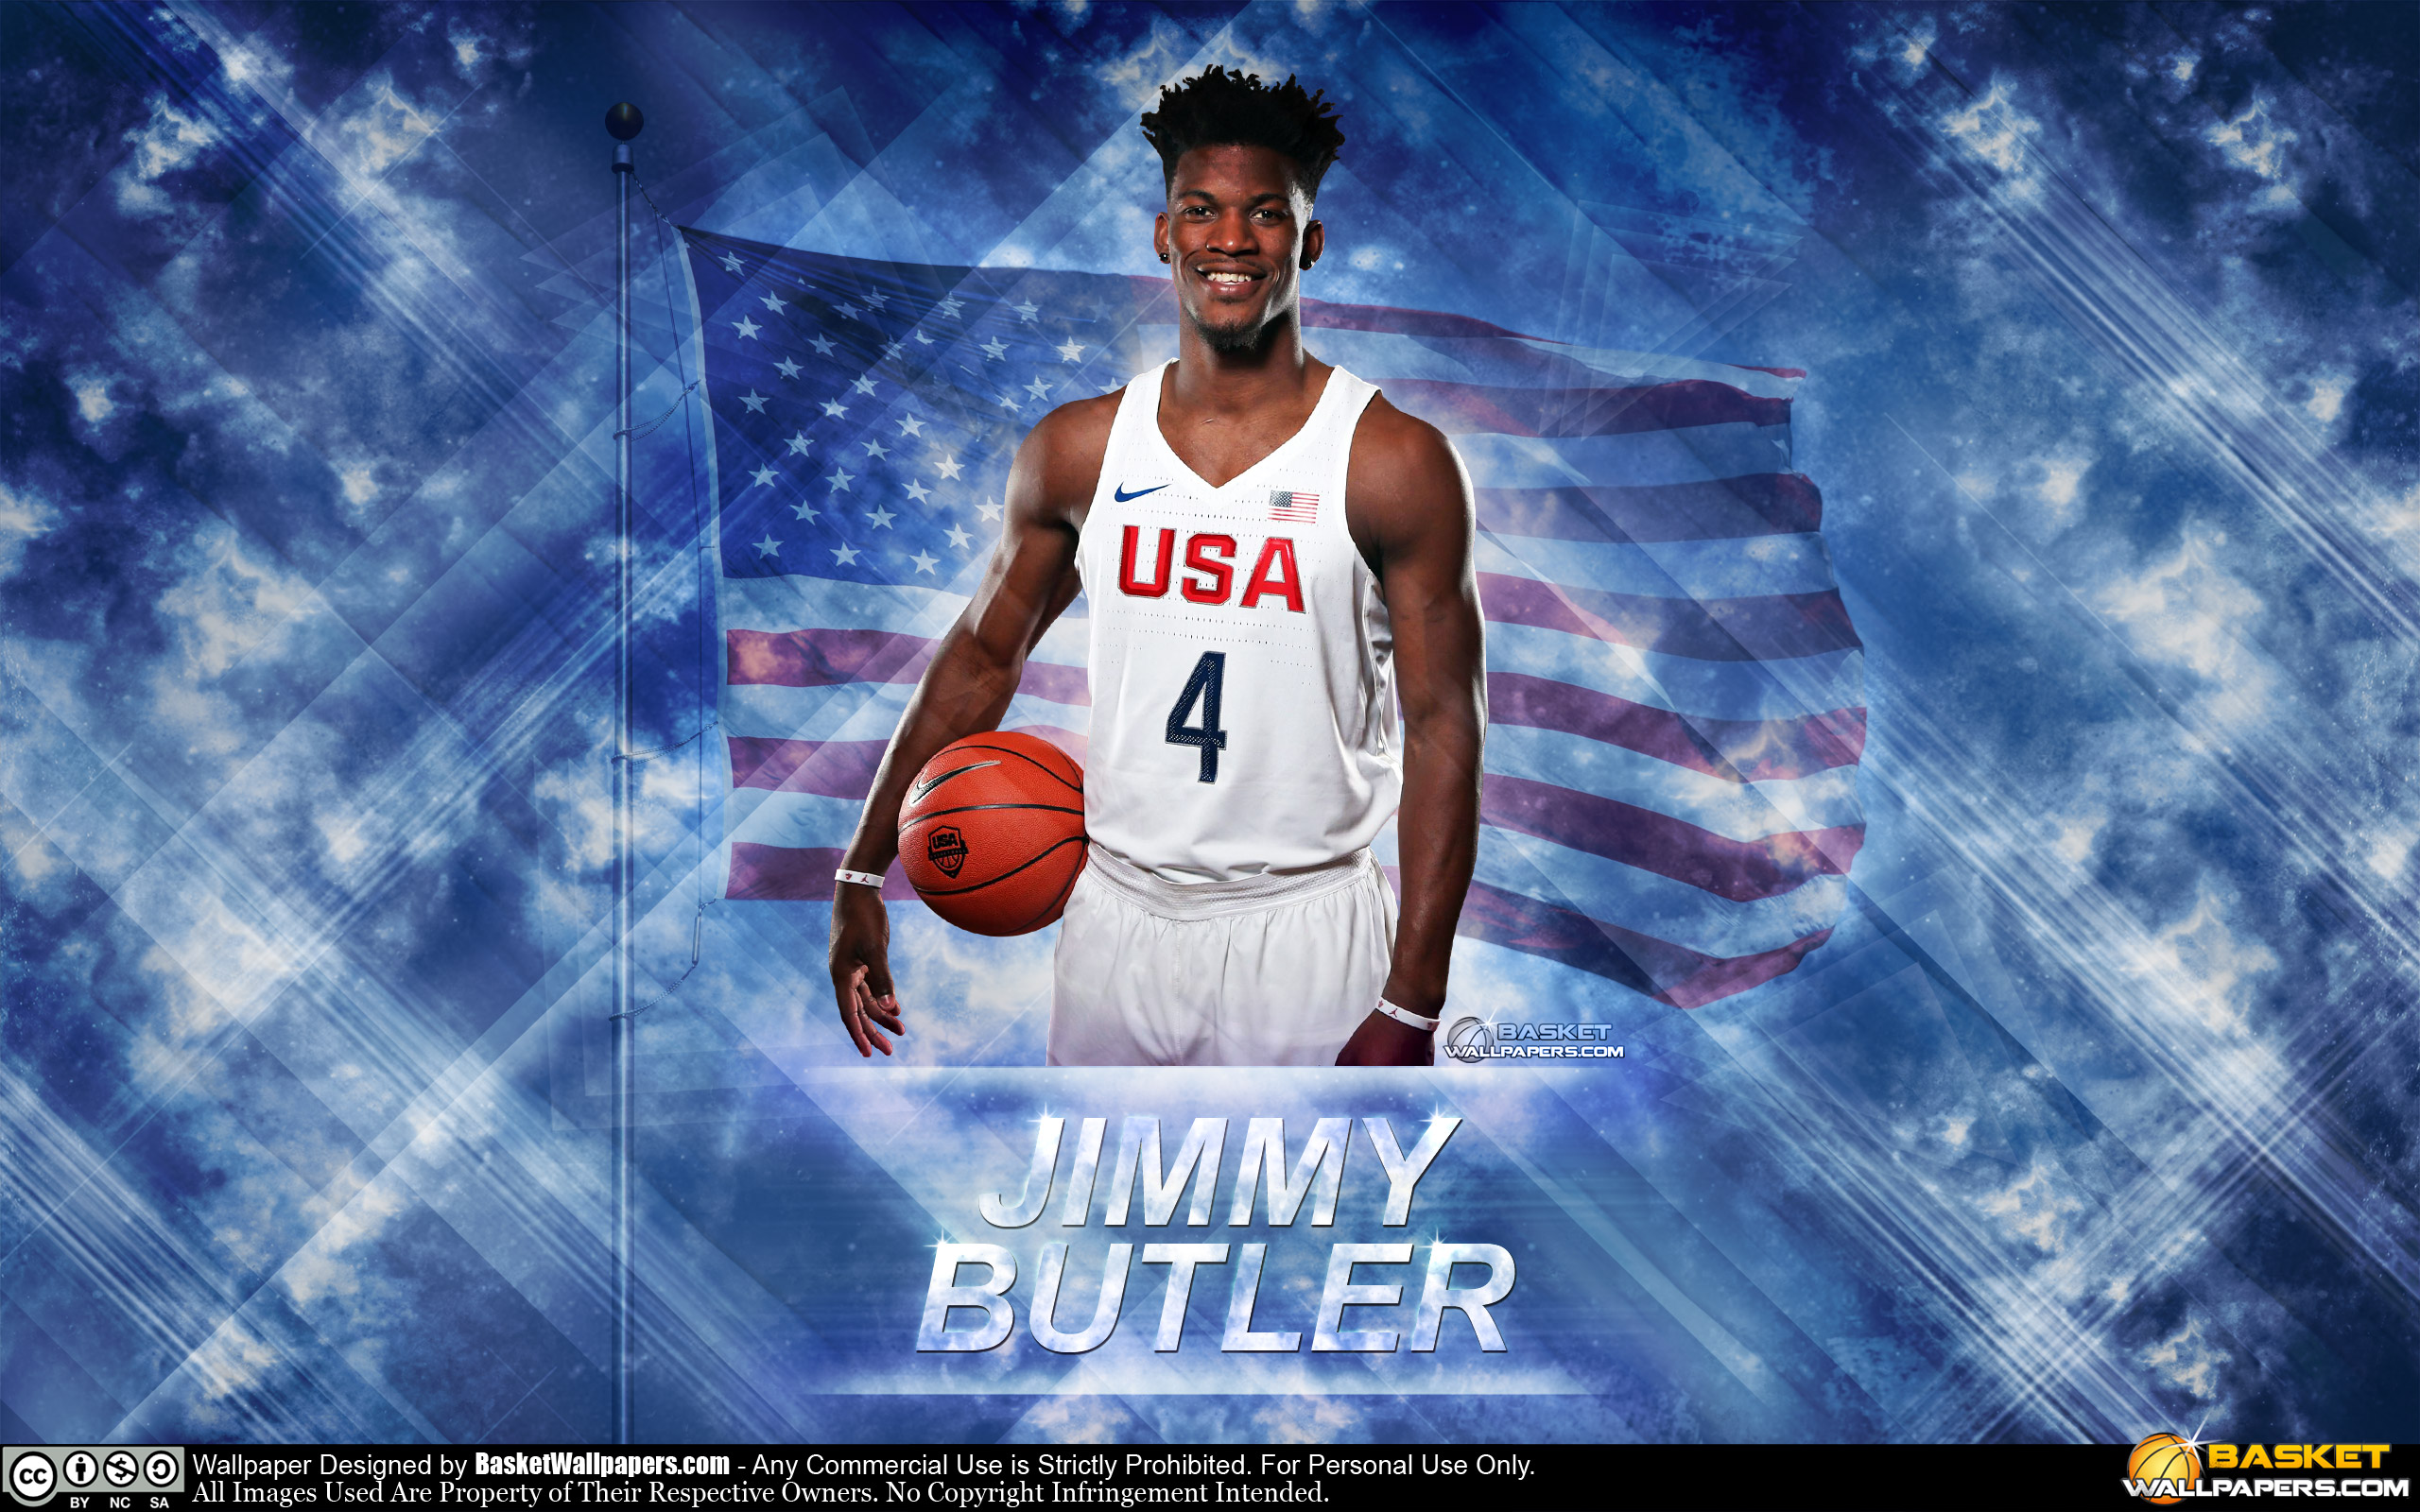 Jimmy Butler USA 2016 Olympics Wallpaper Basketball Wallpapers